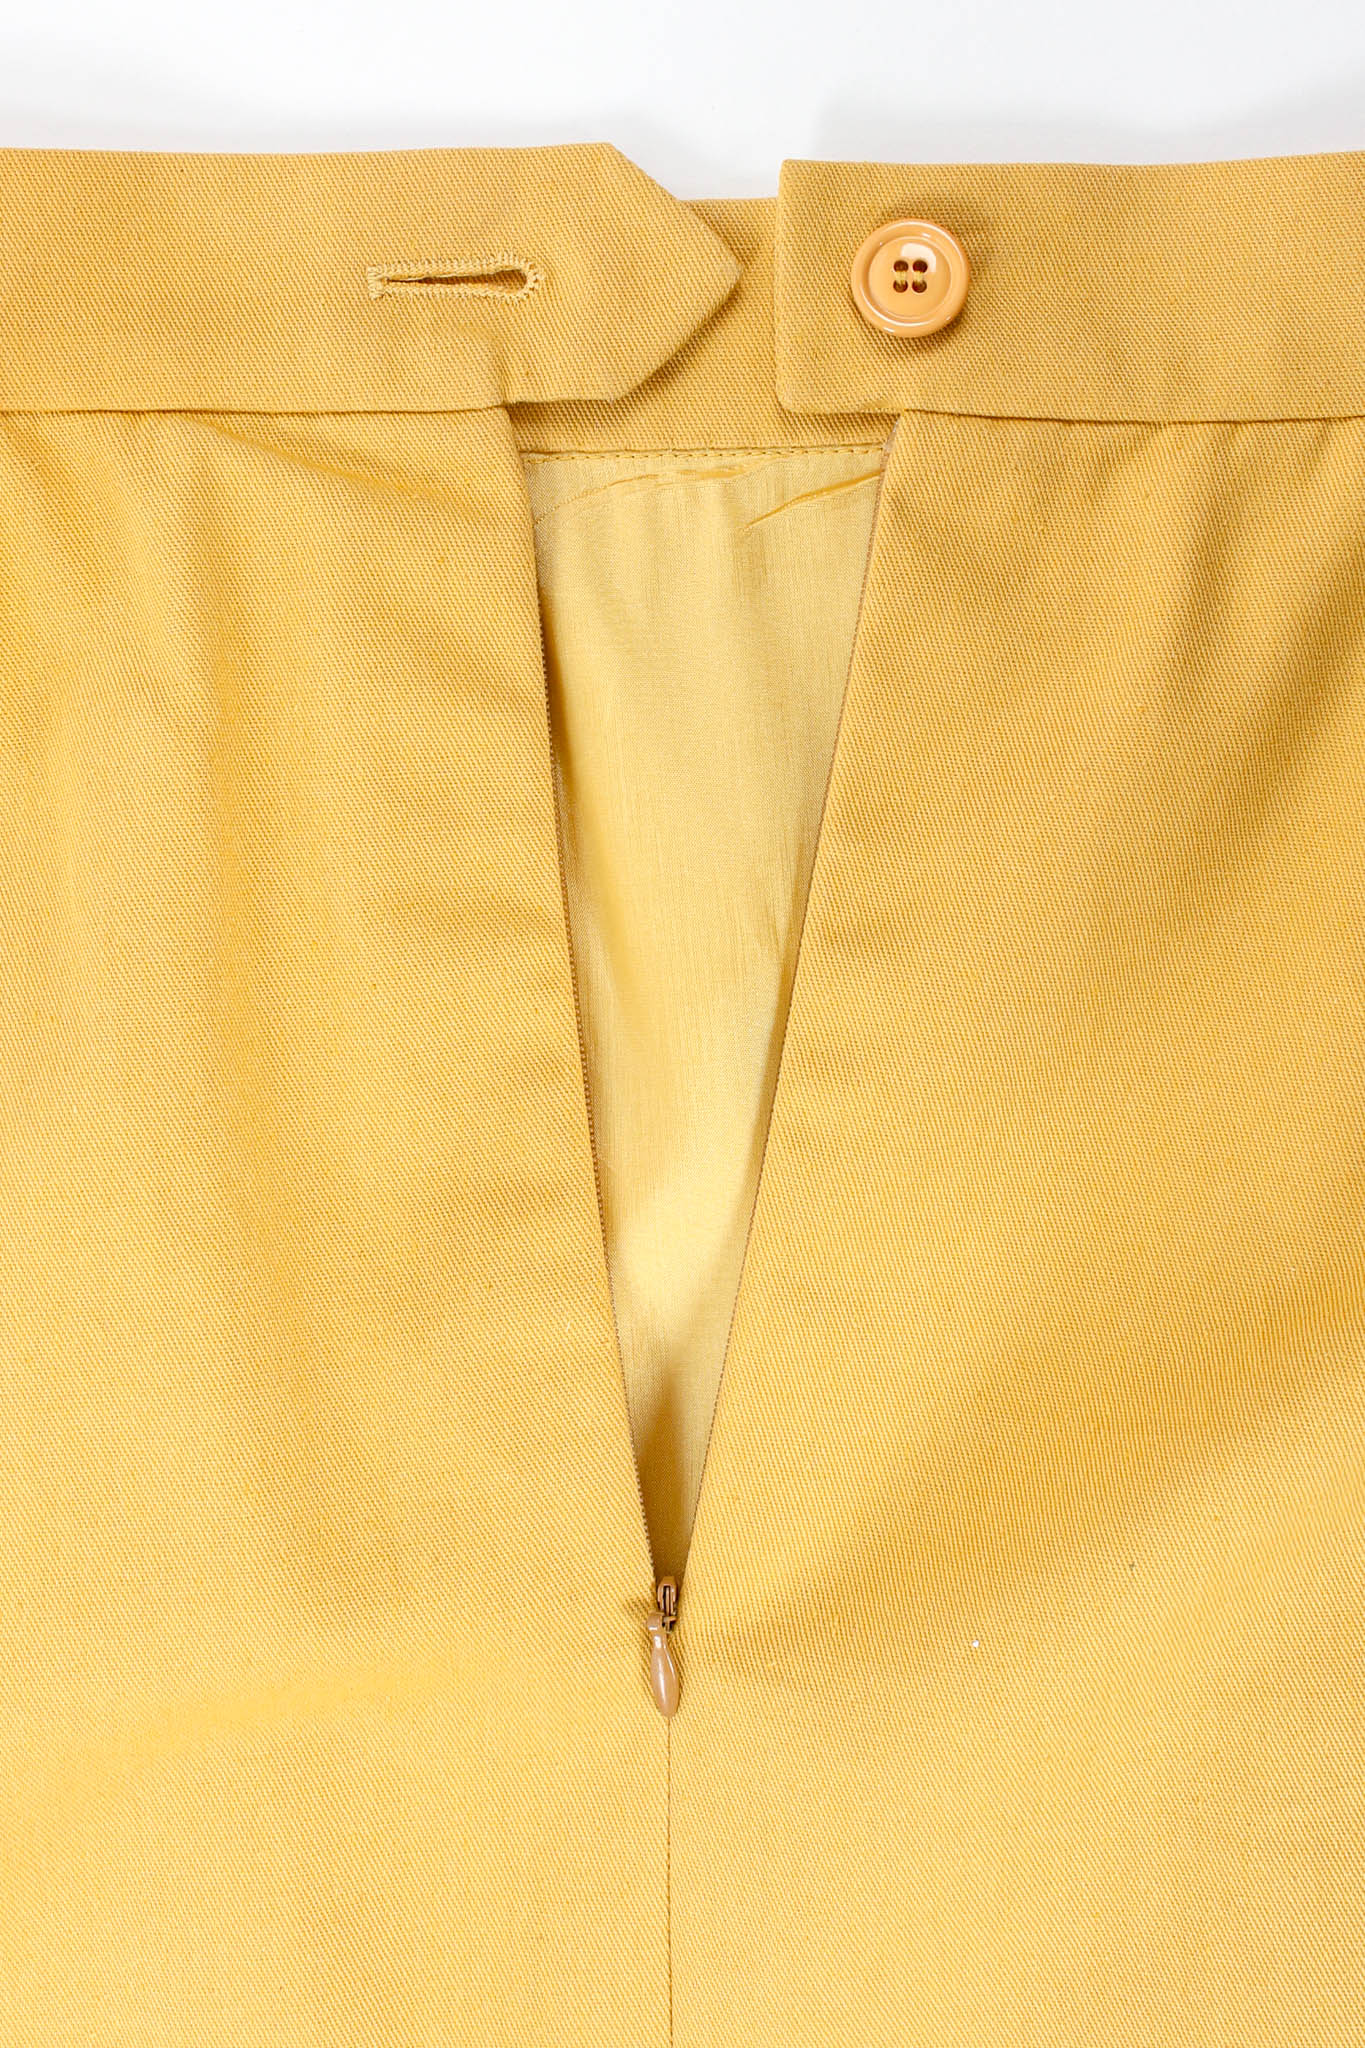 Vintage Christian Dior Golden Blazer & Skirt Suit Set skirt closure @ Recess Los Angeles